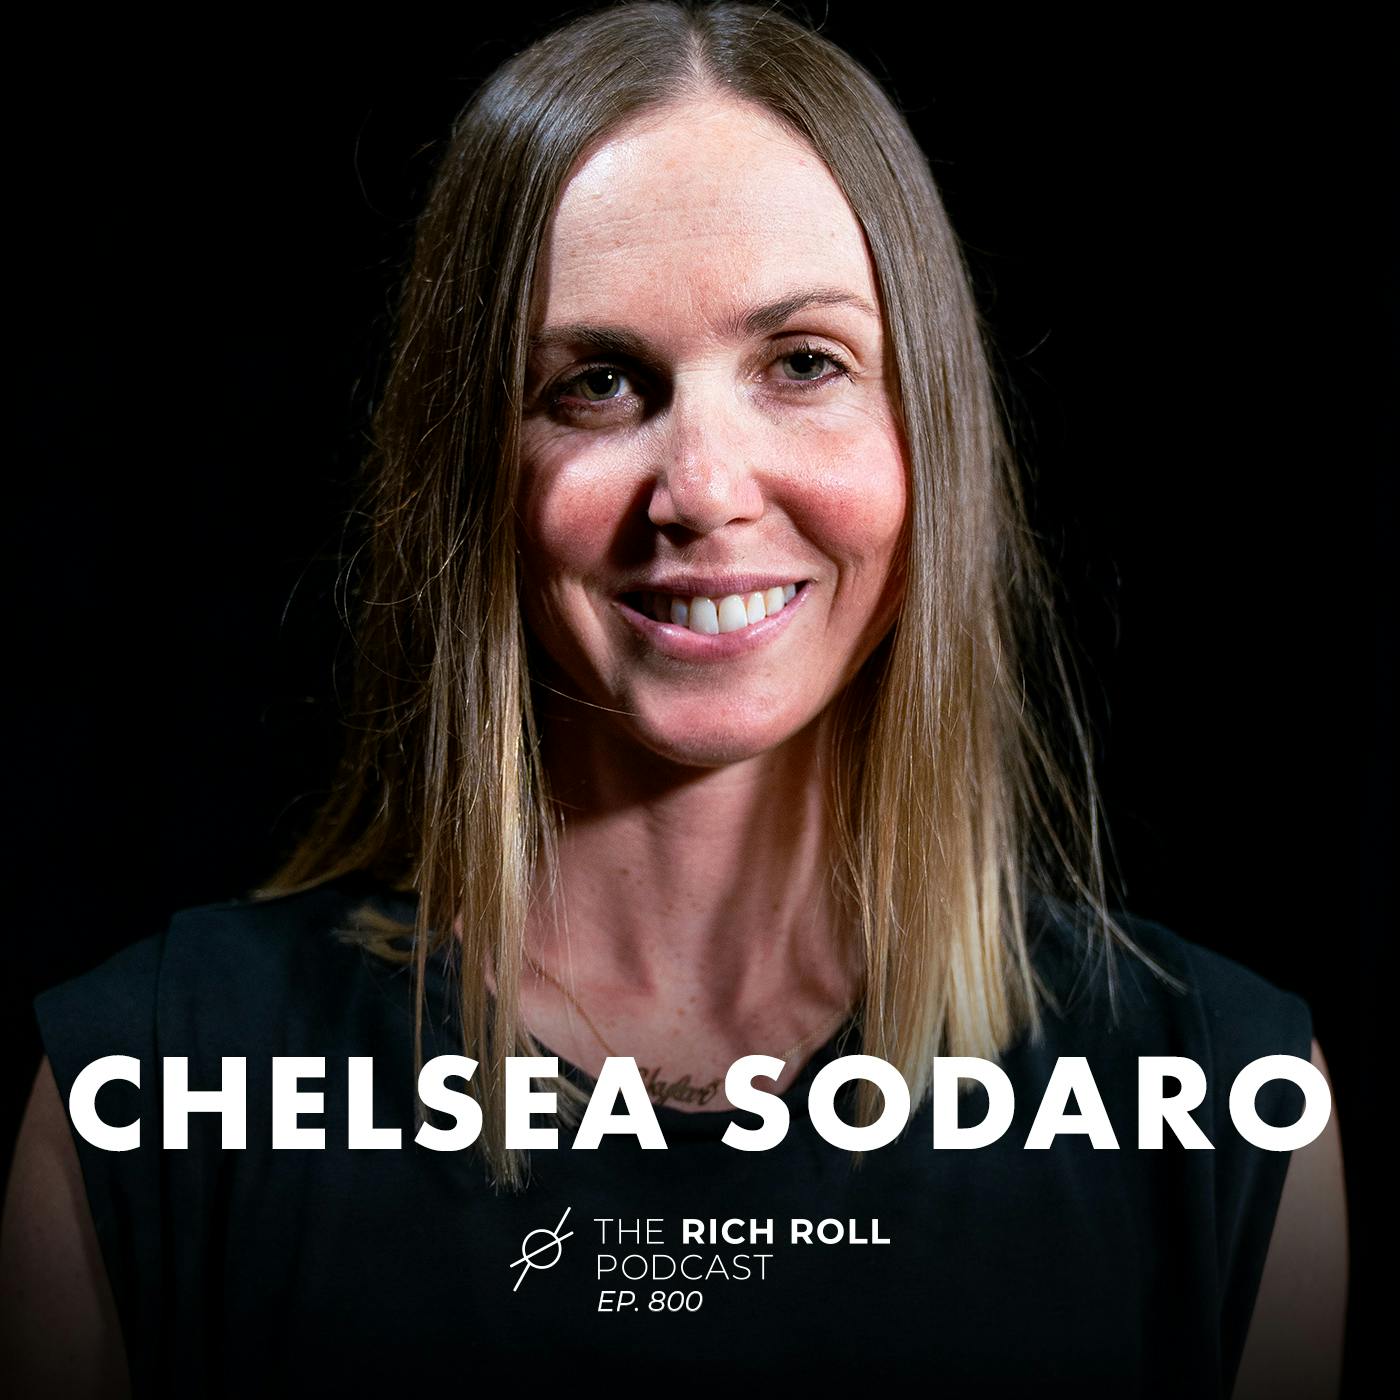 Chelsea Sodaro’s Biggest Victory Isn’t Kona—It’s Her Well-Being